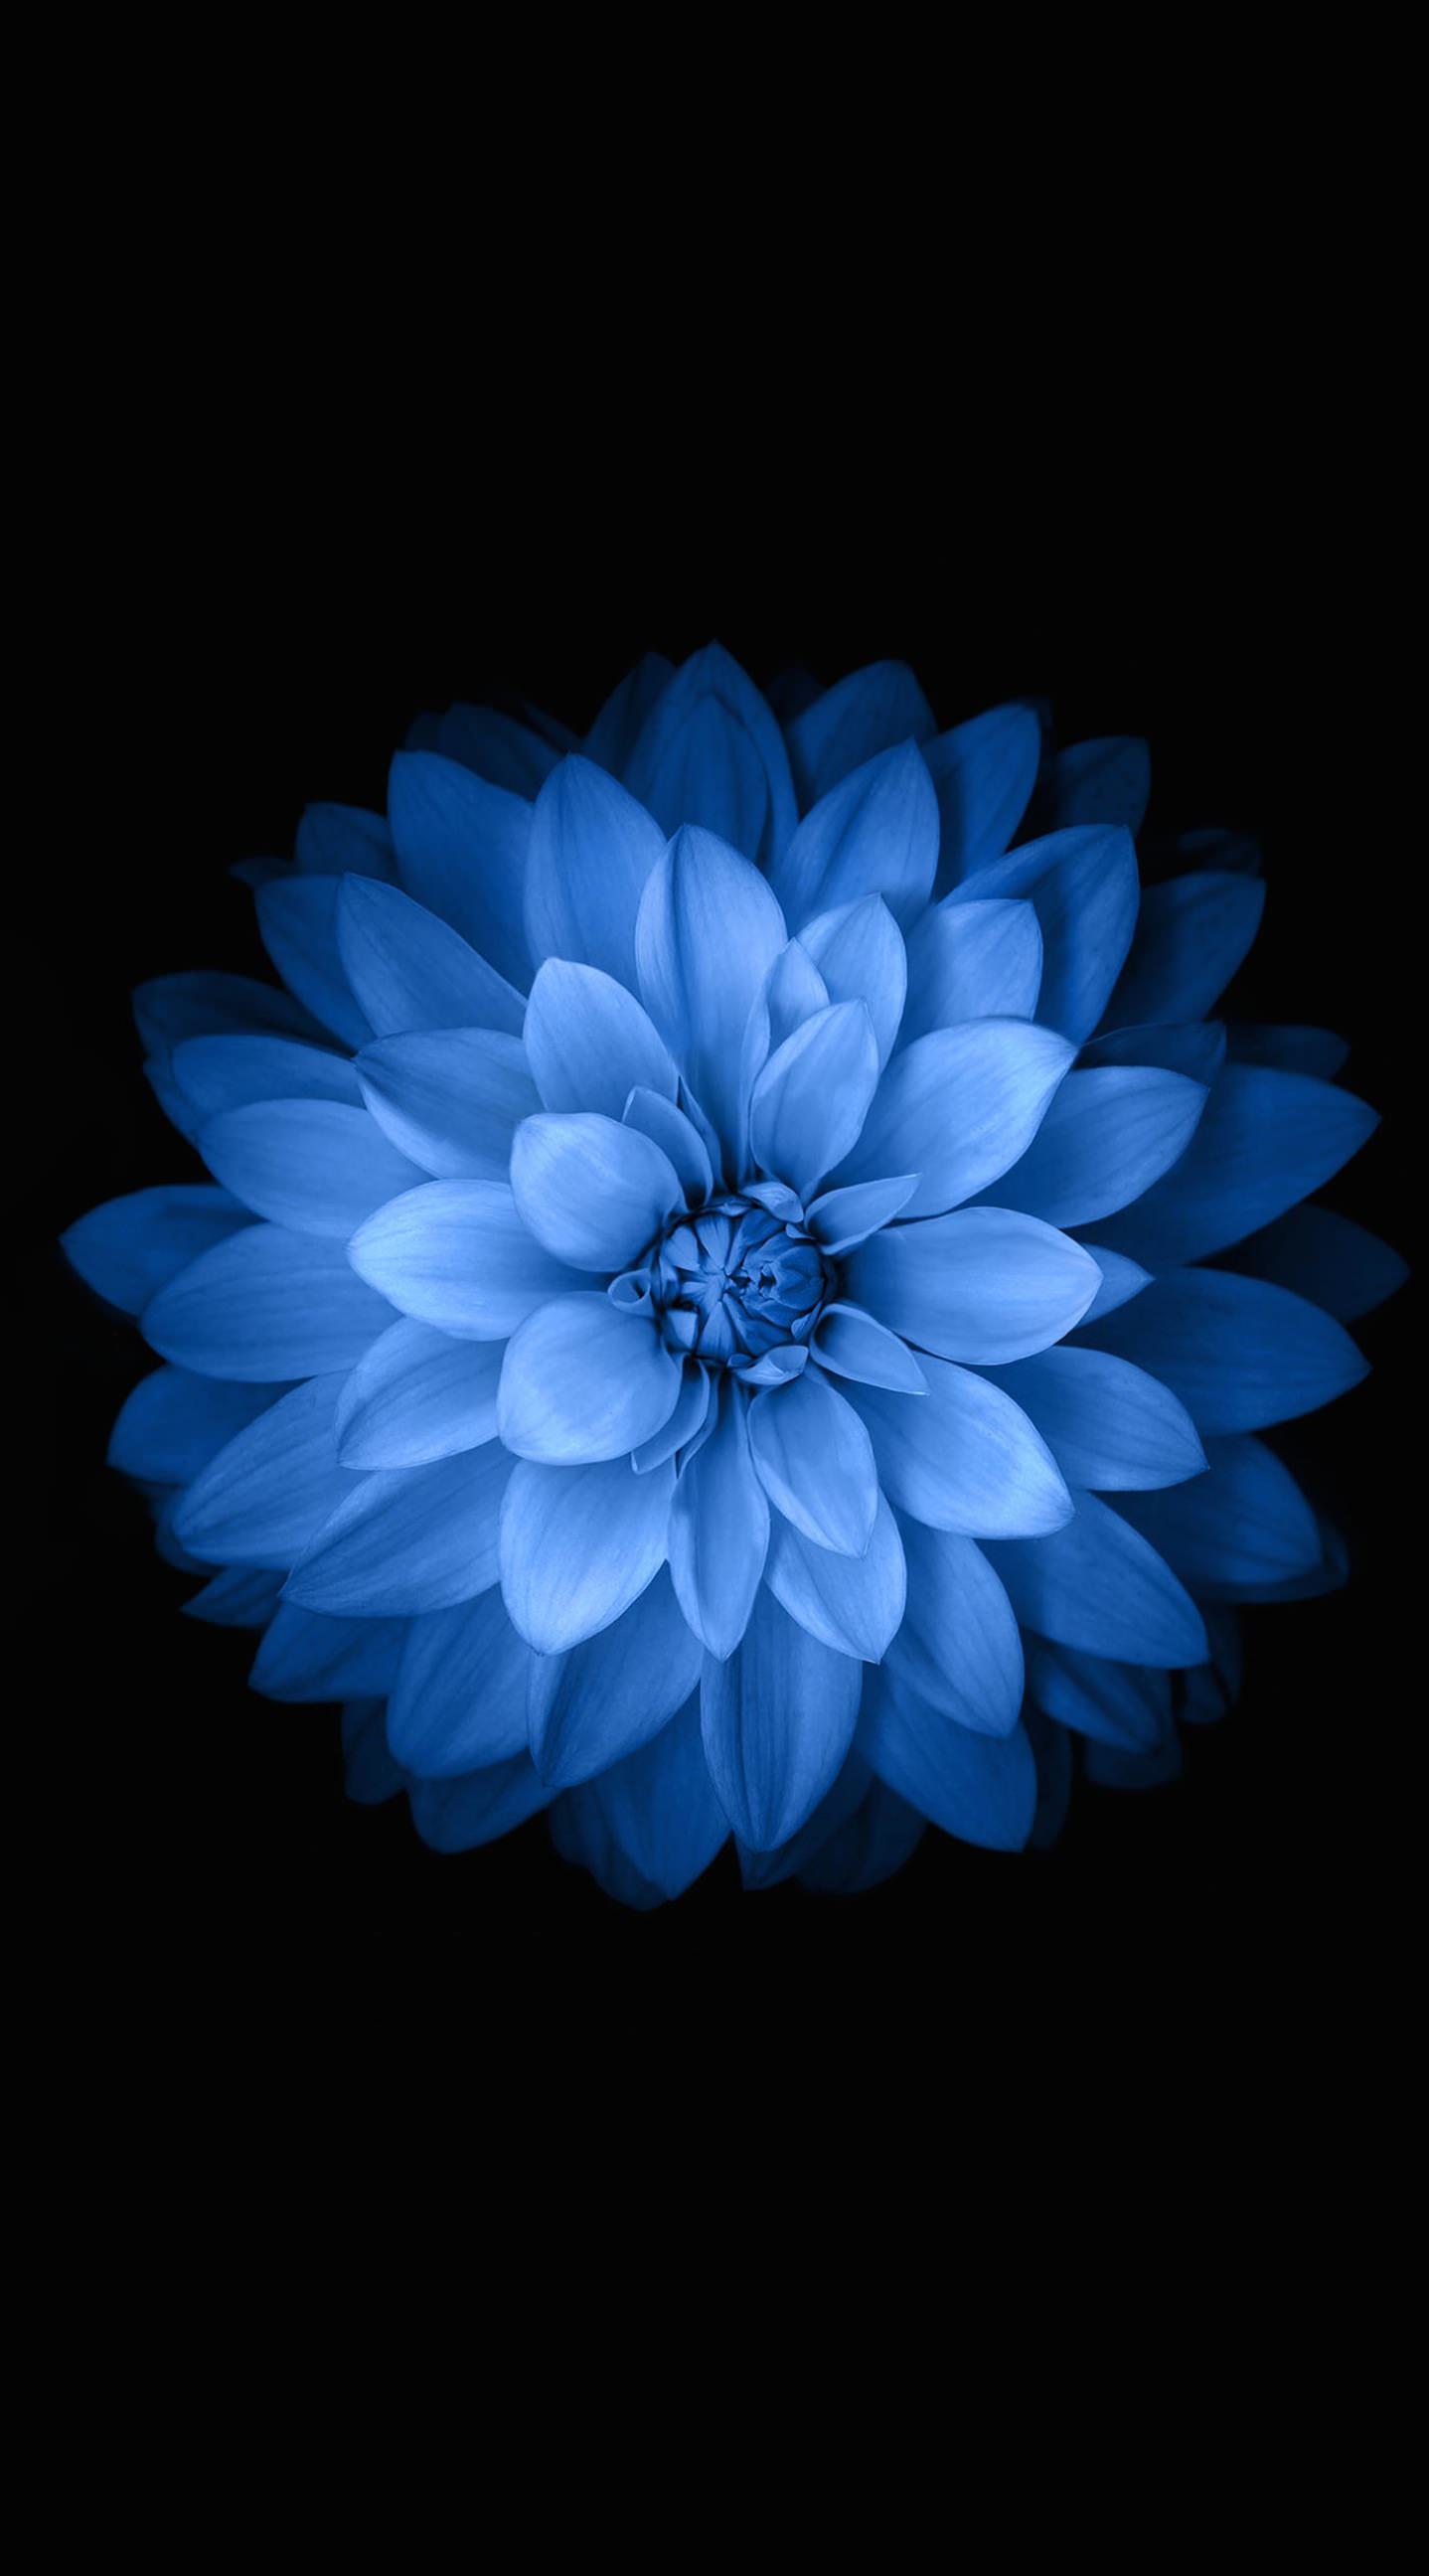 Free download Blue black flower wallpaperc iPhone6Plus 1438x2592